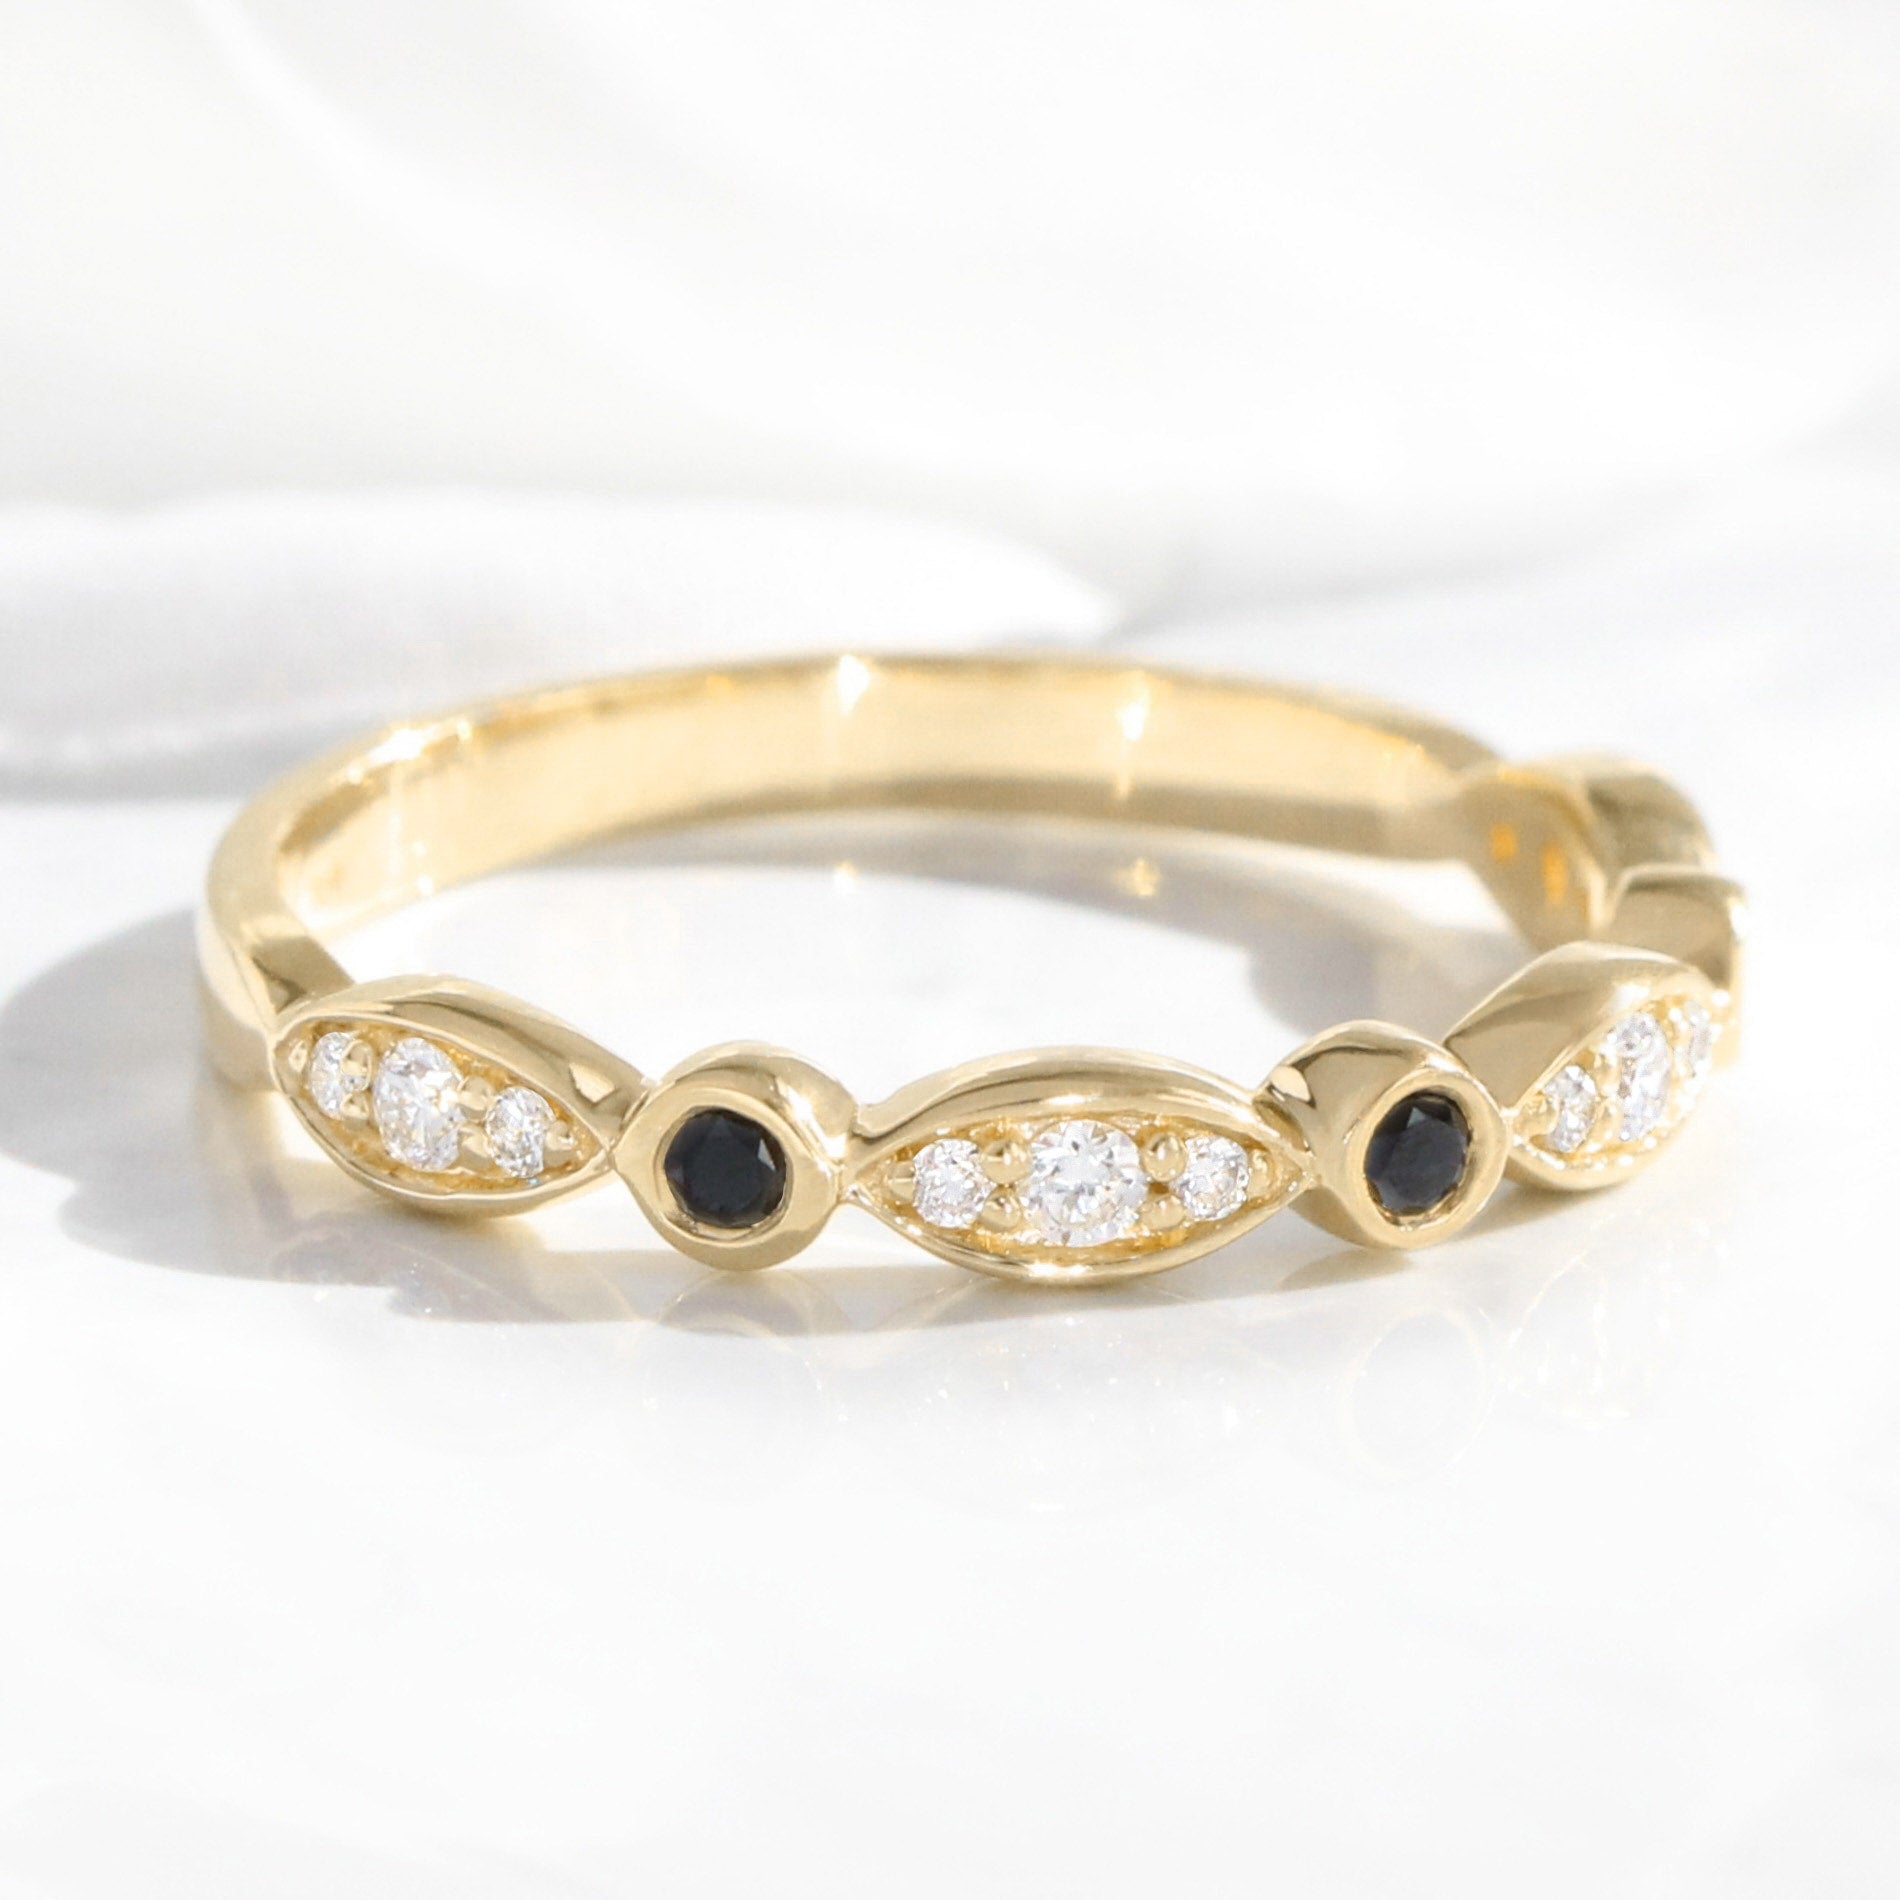 Bezel white and black diamond wedding ring yellow gold scalloped half eternity band la more design jewelry